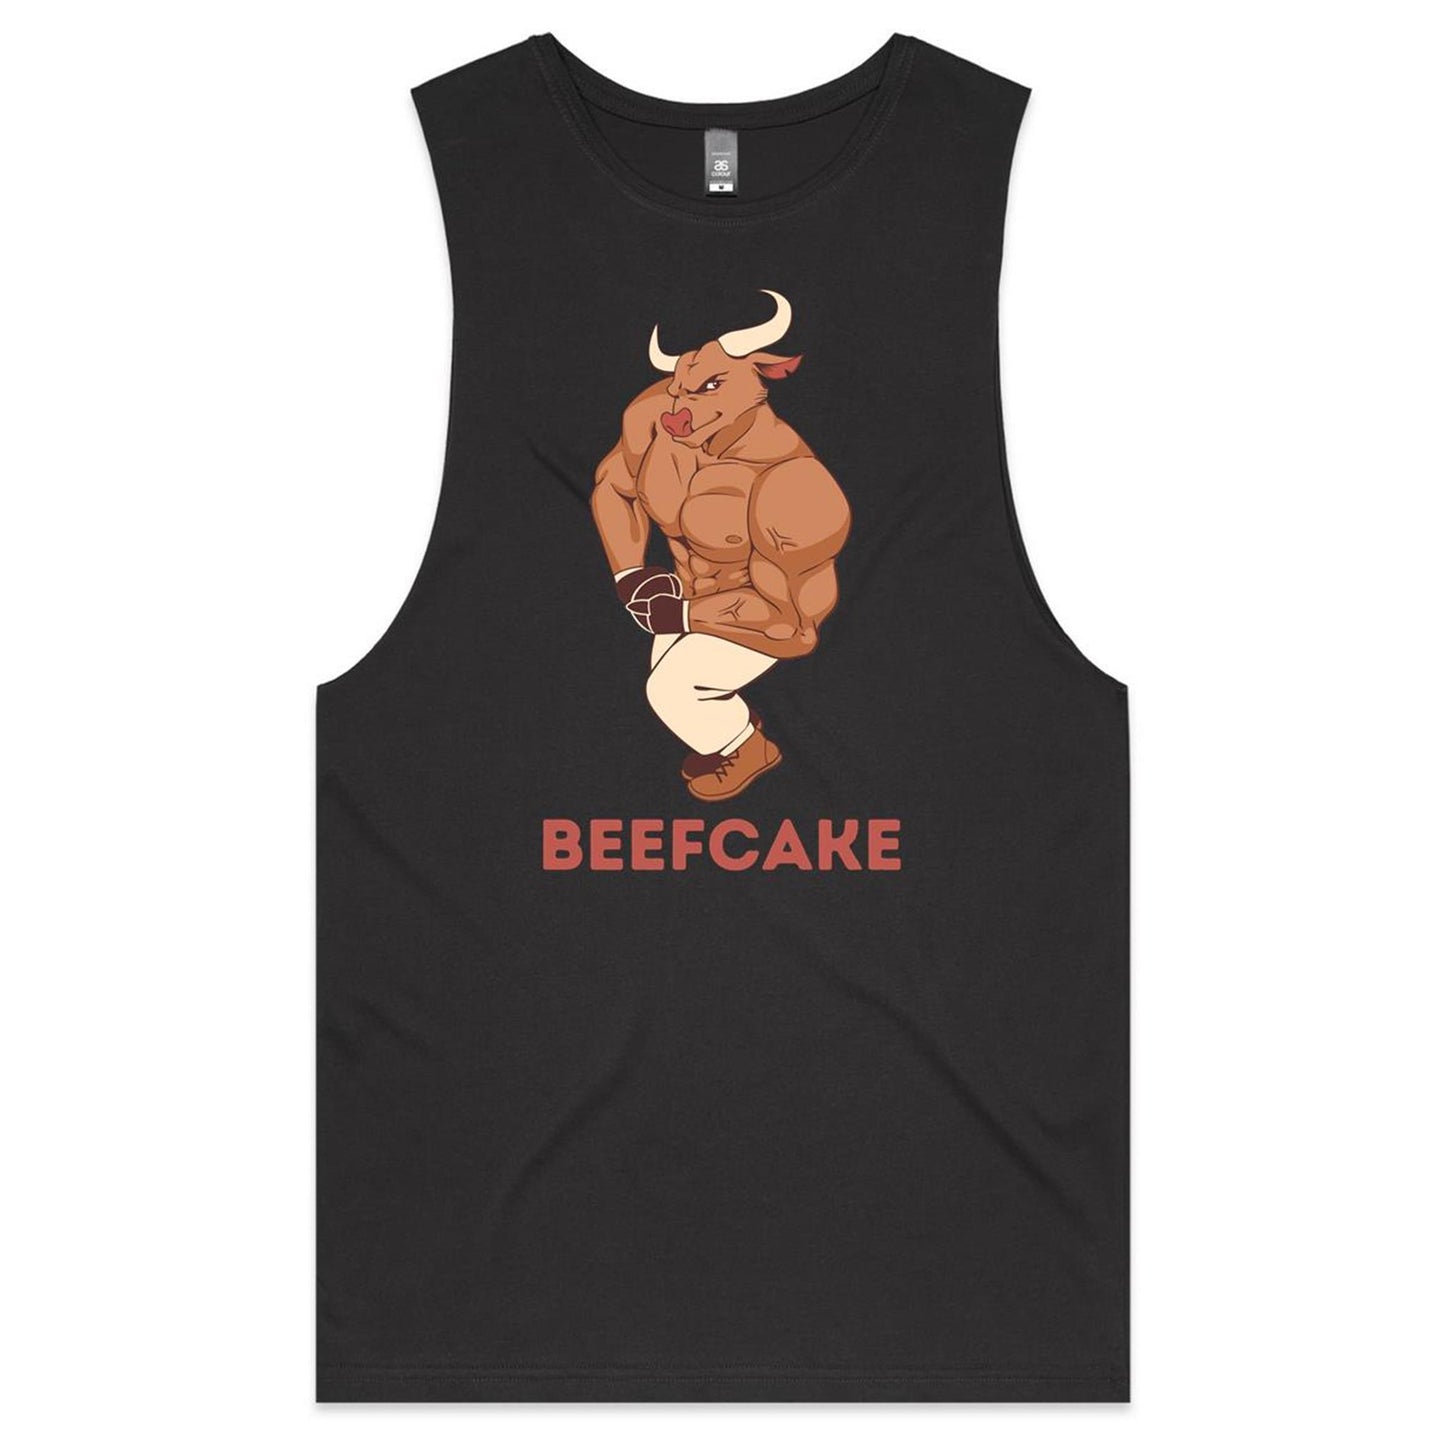 Beefcake, Bull, Gym - Mens Tank Top Tee Coal Mens Tank Fitness